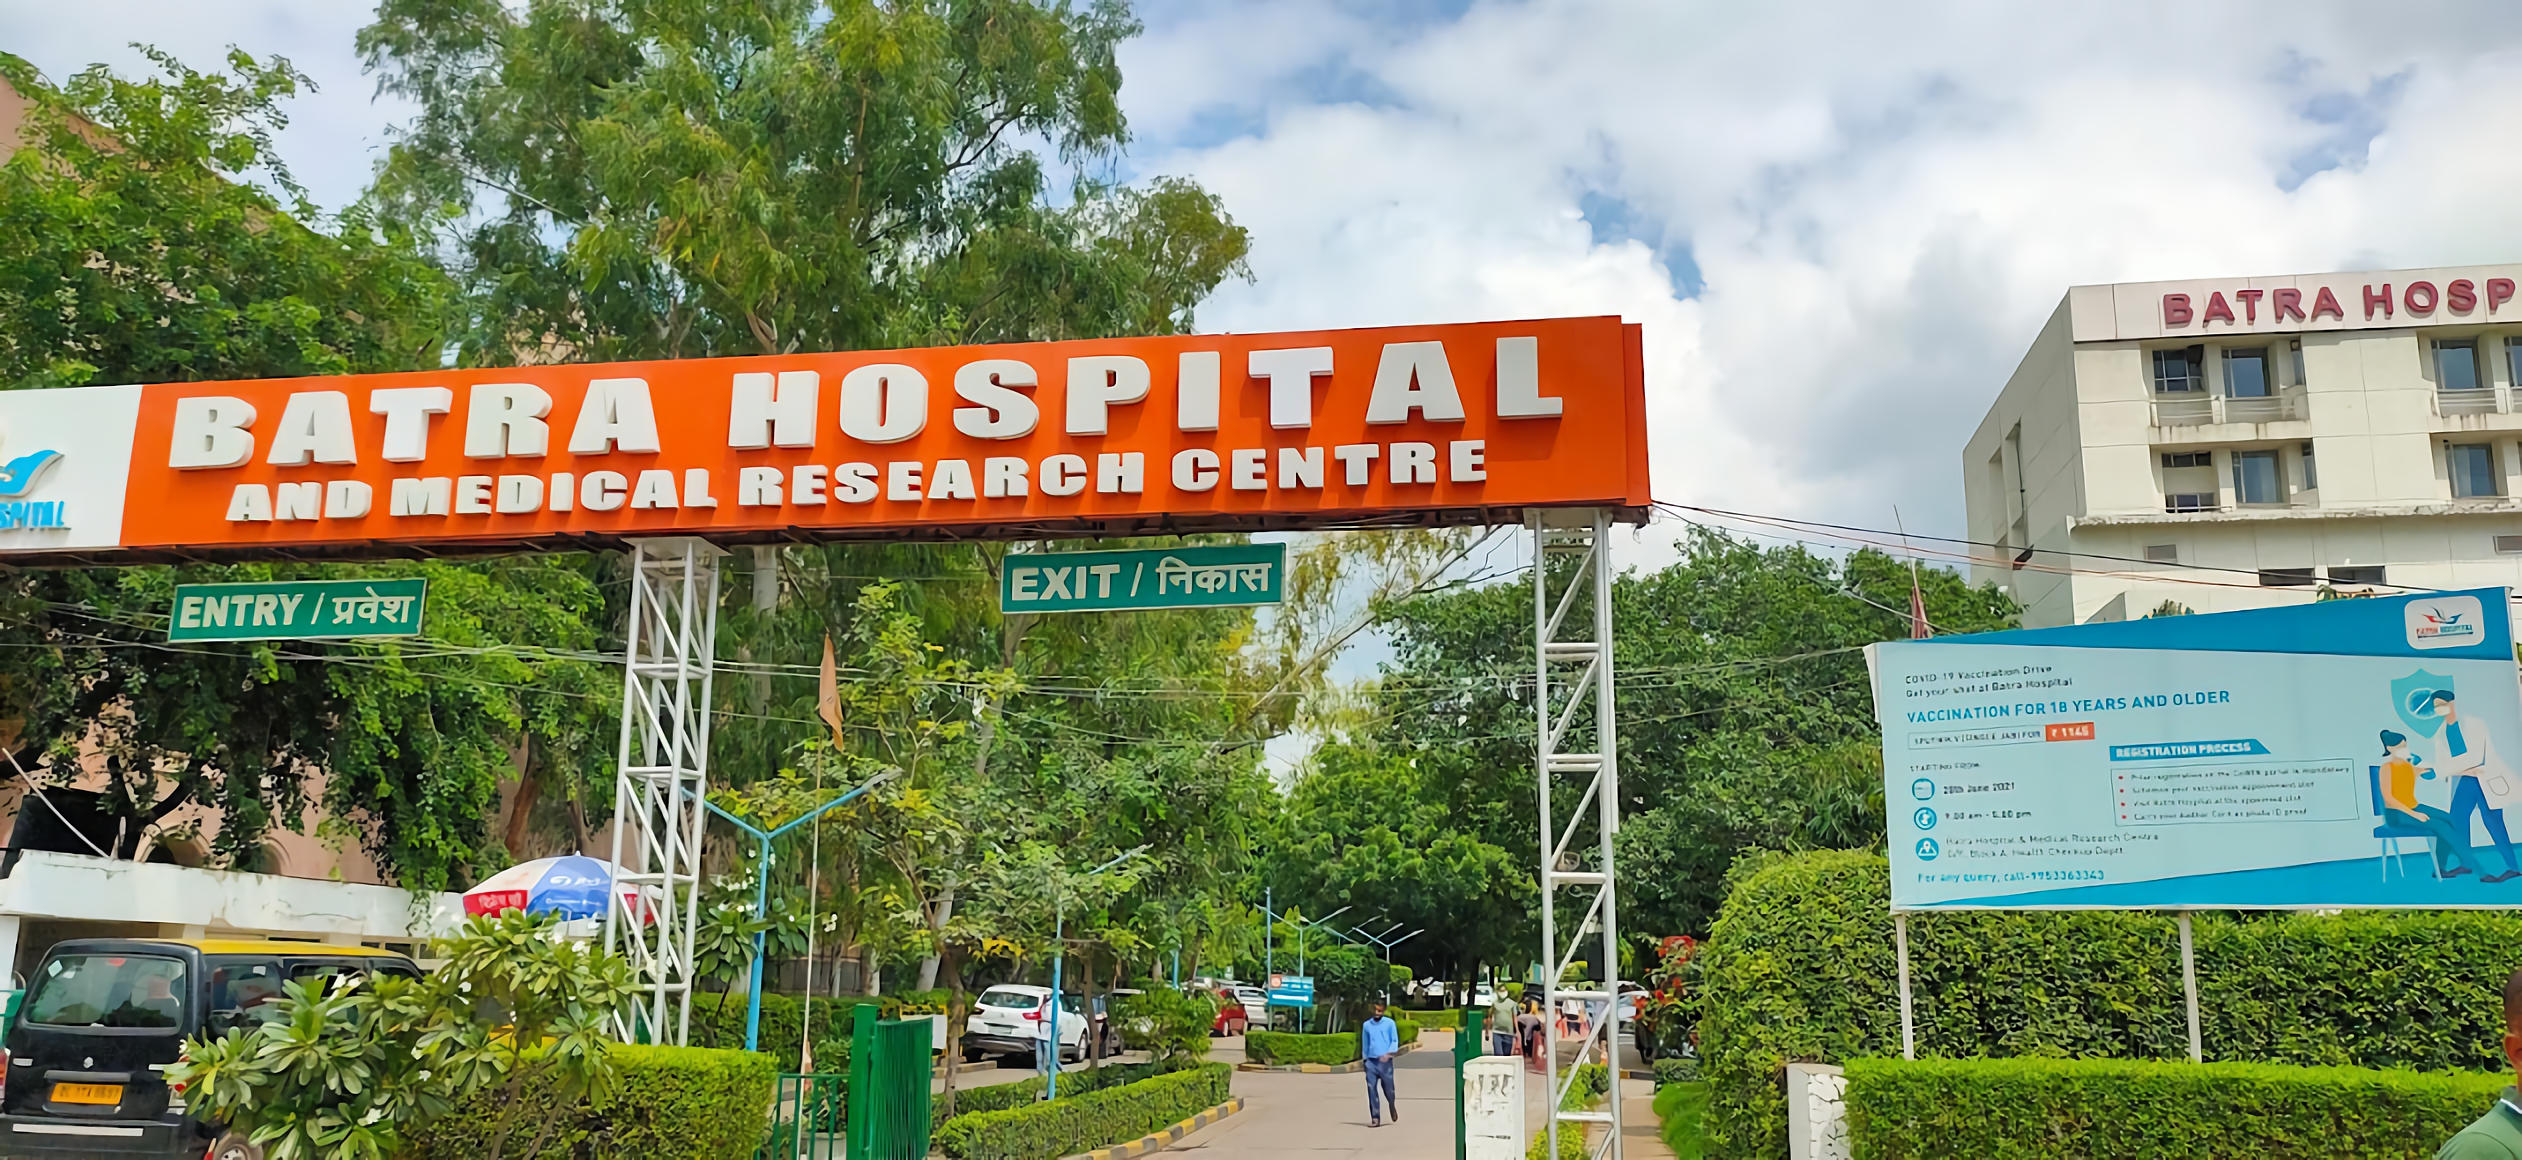 Batra Hospital And Medical Research Centre